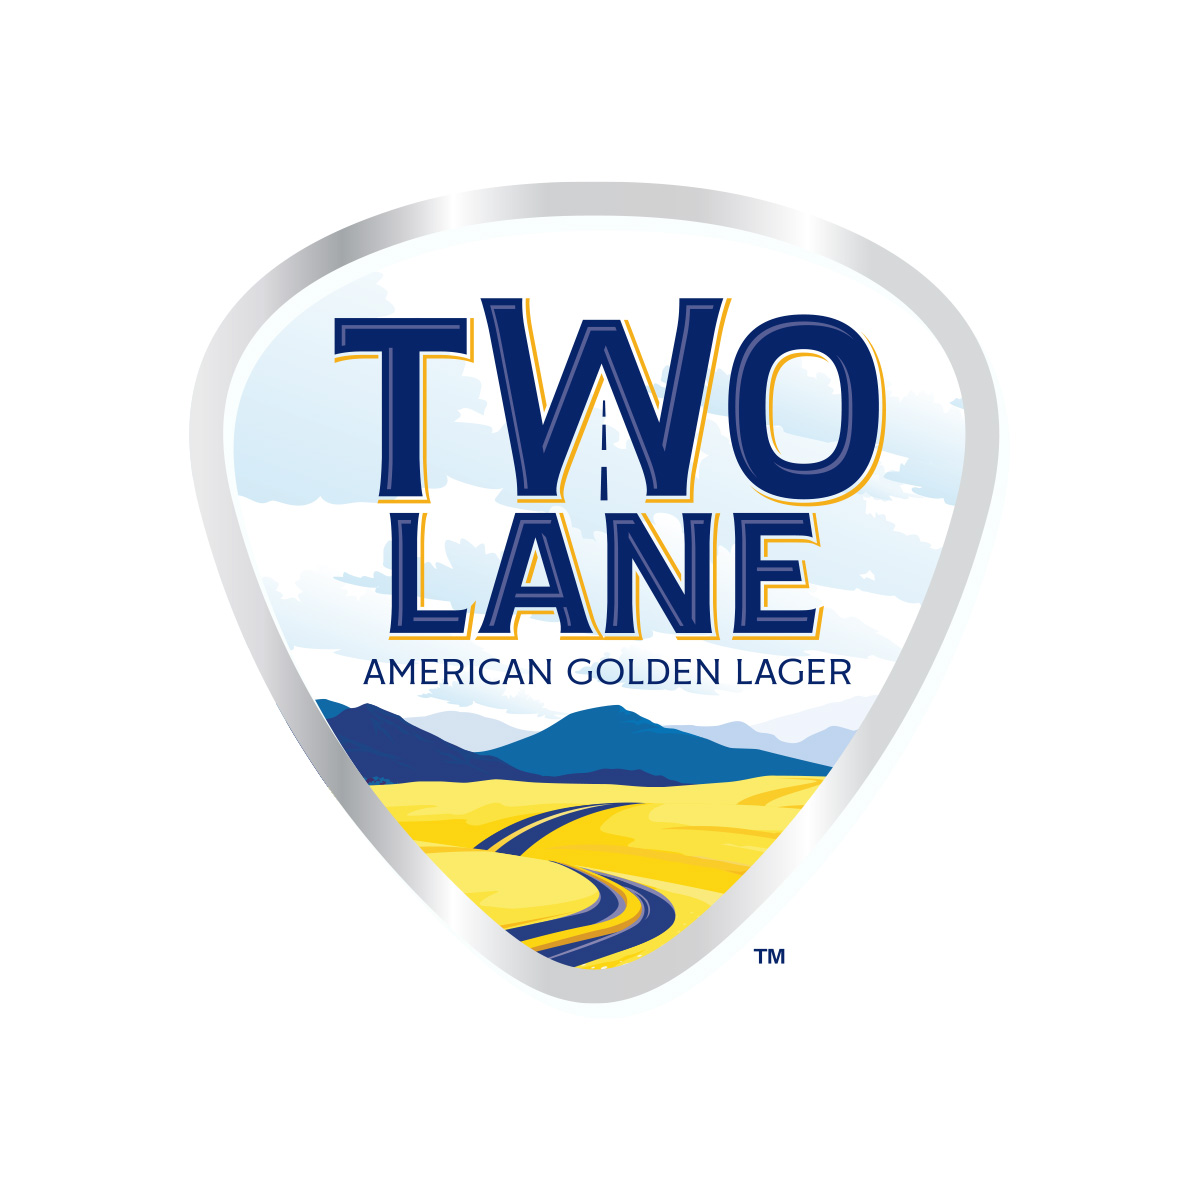 Two Lane